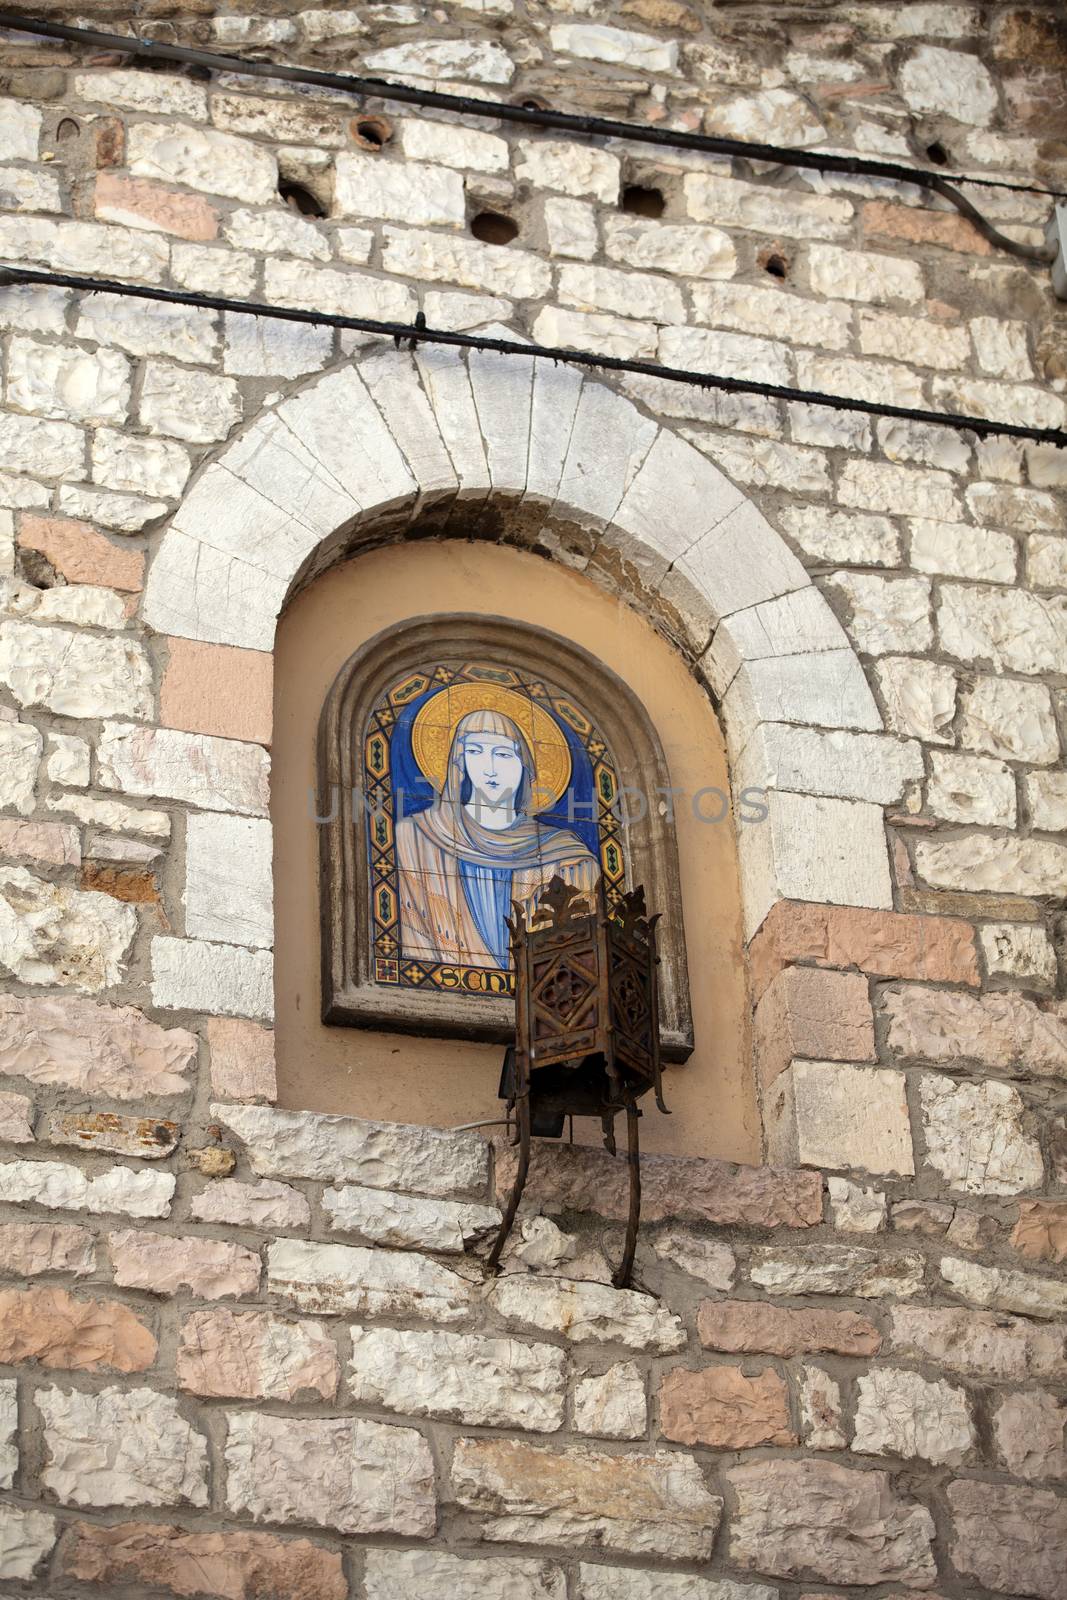 Chapel i n Assisi by wjarek